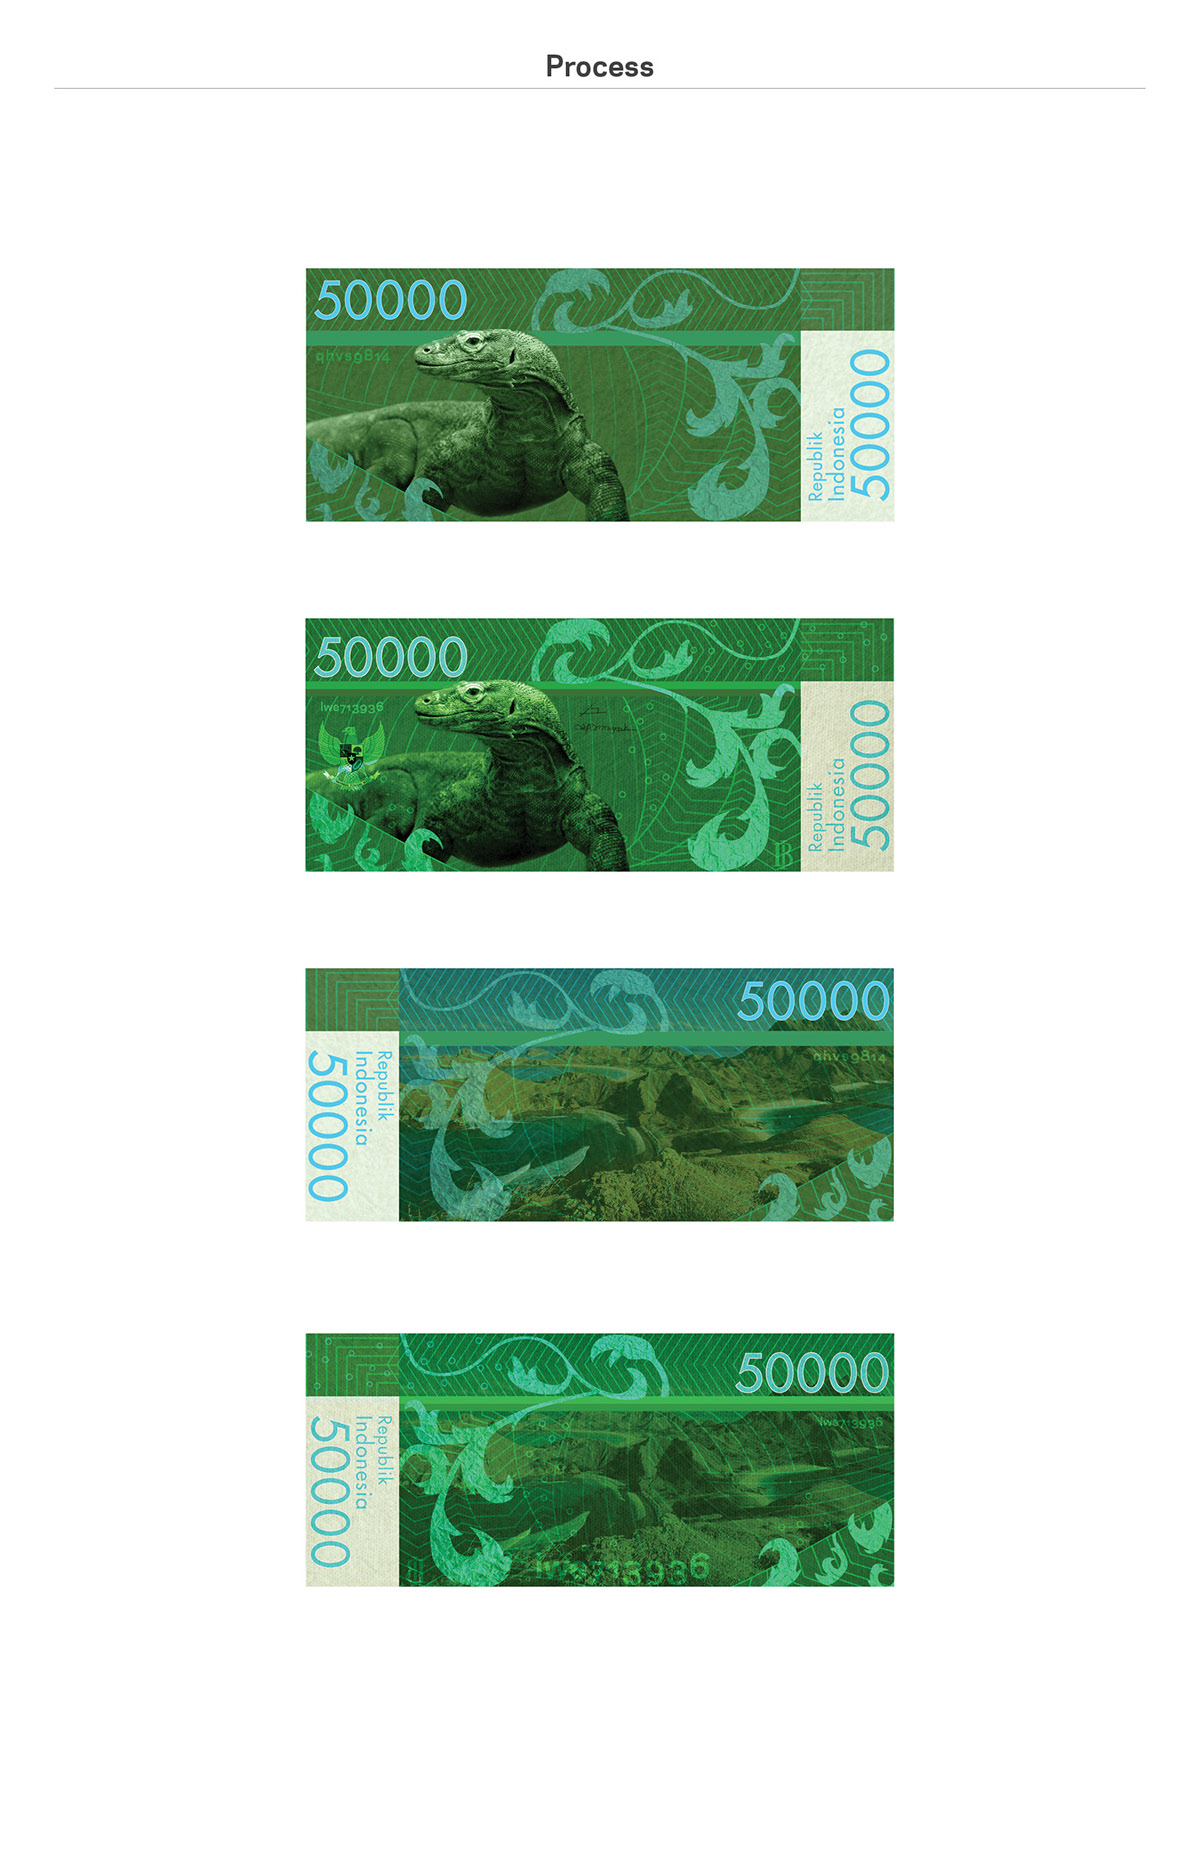 indonesia rupiah currency bird of paradise komodo dragon orangutan